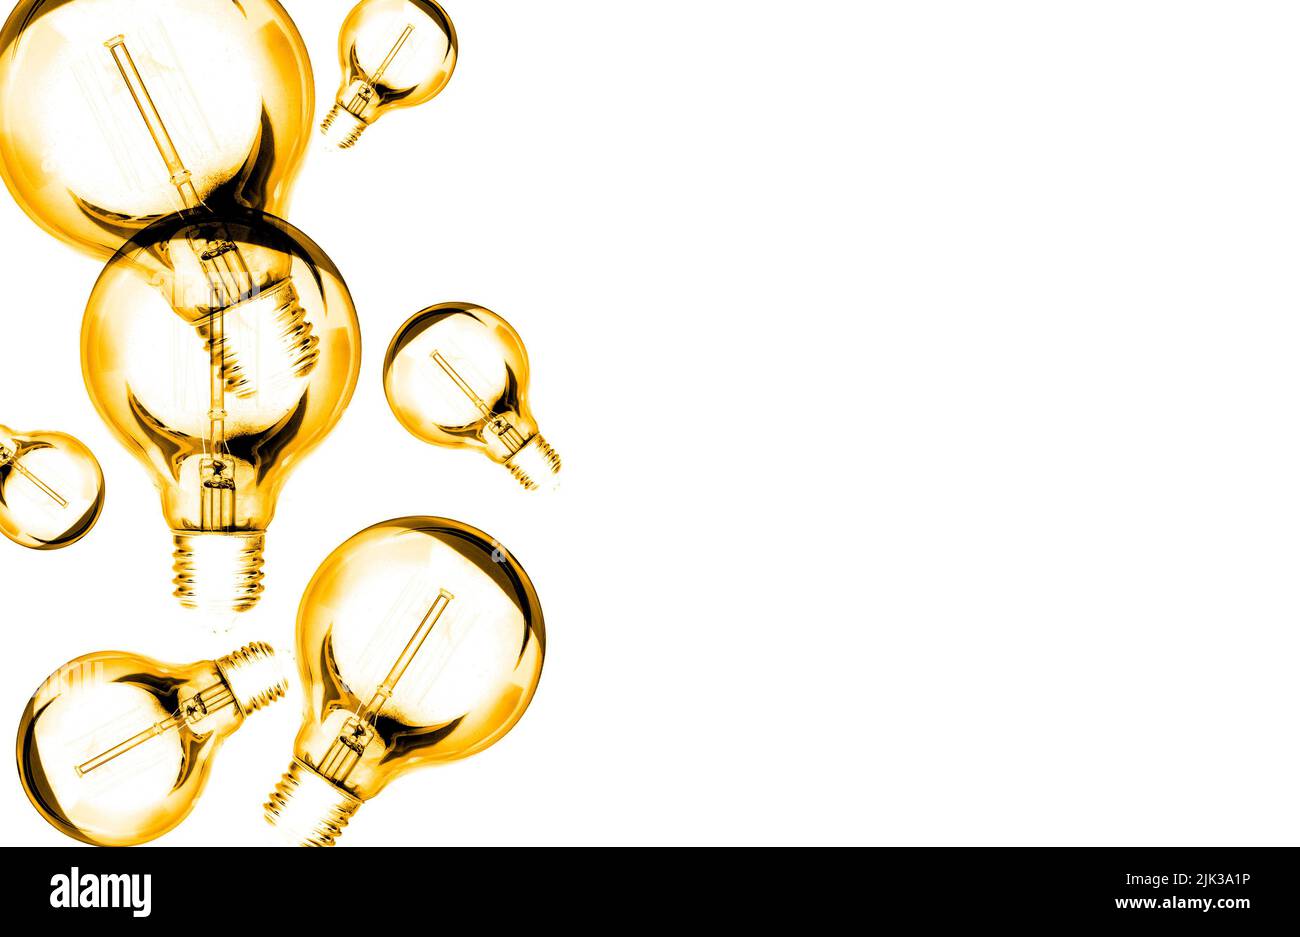 Golden light bulbs concept - stock photo Stock Photo